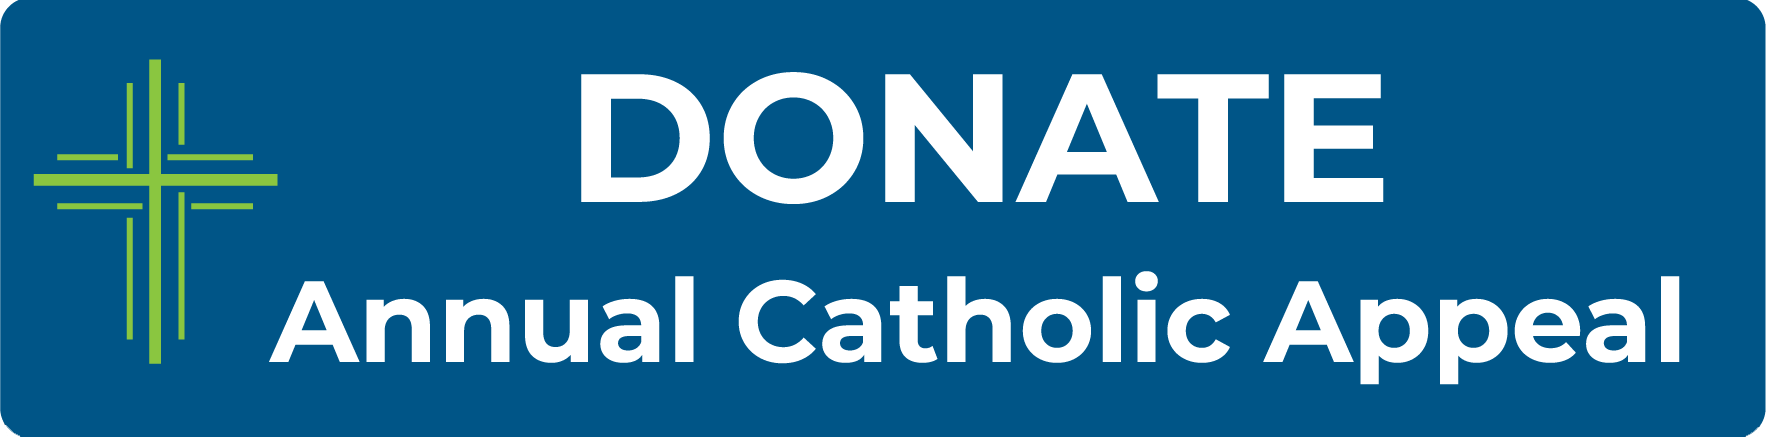 Annual Catholic Appeal - St. John the Baptist Covington, WA